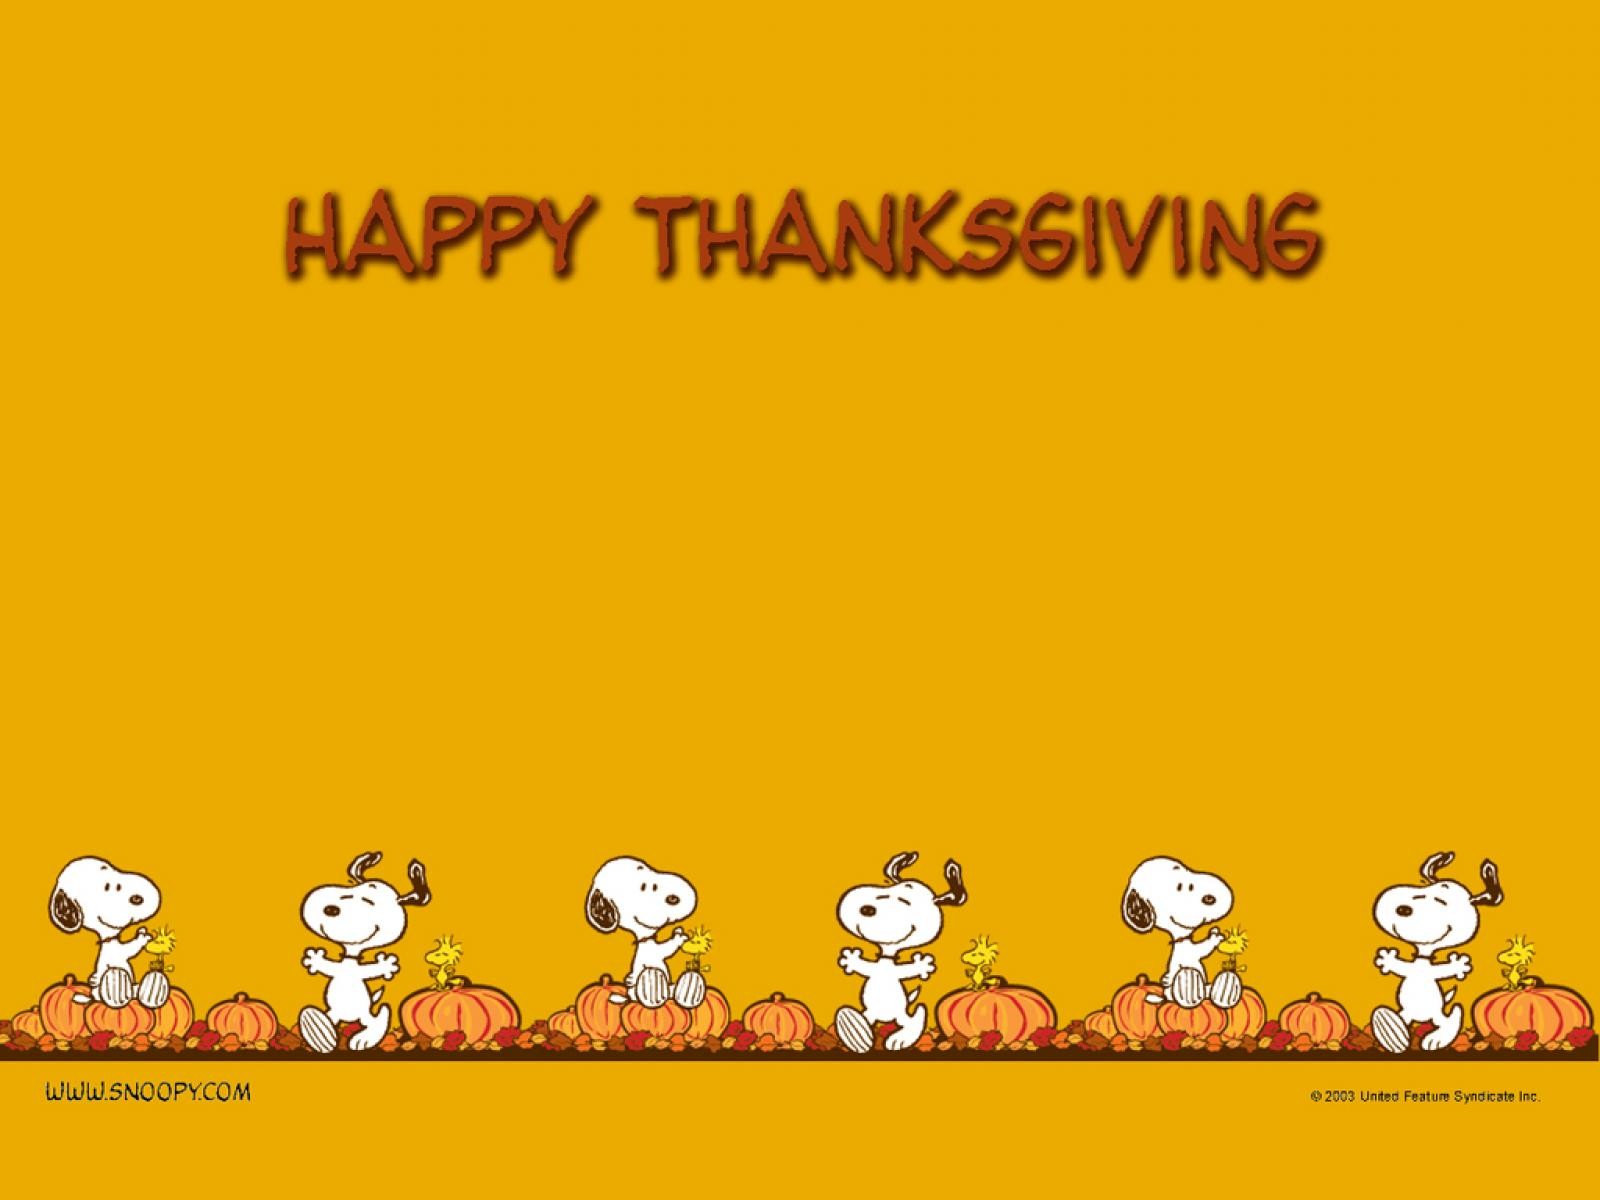 General 1600x1200 Peanuts (comic) Snoopy Thanksgiving cartoon 2003 (Year) orange background typography